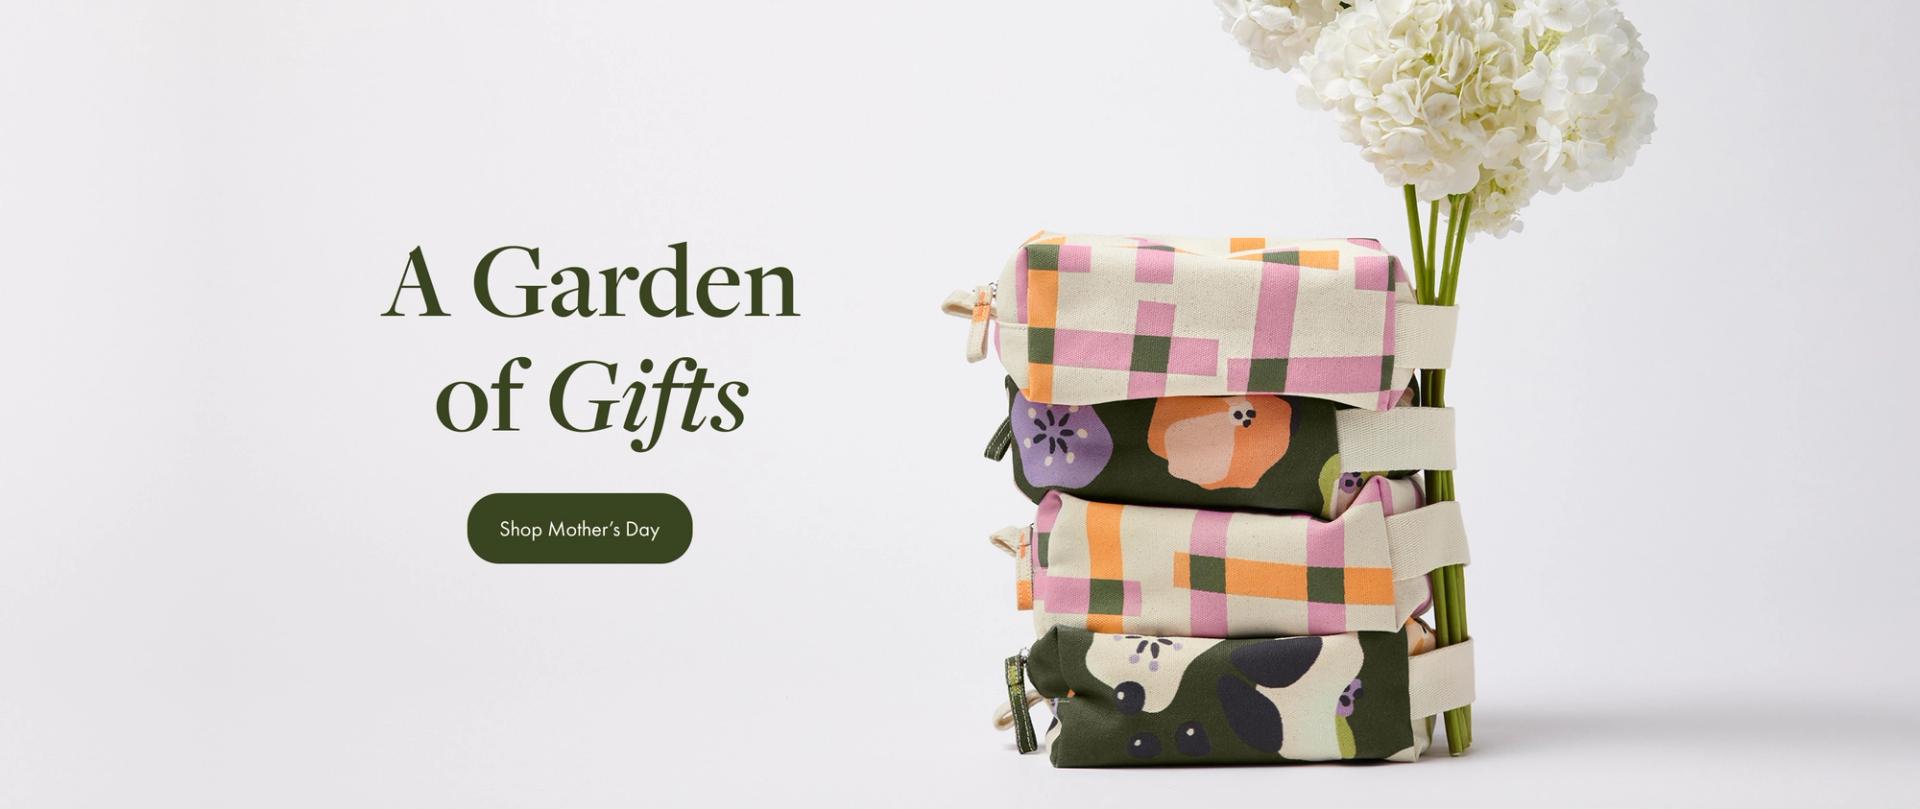 A garden of gifts